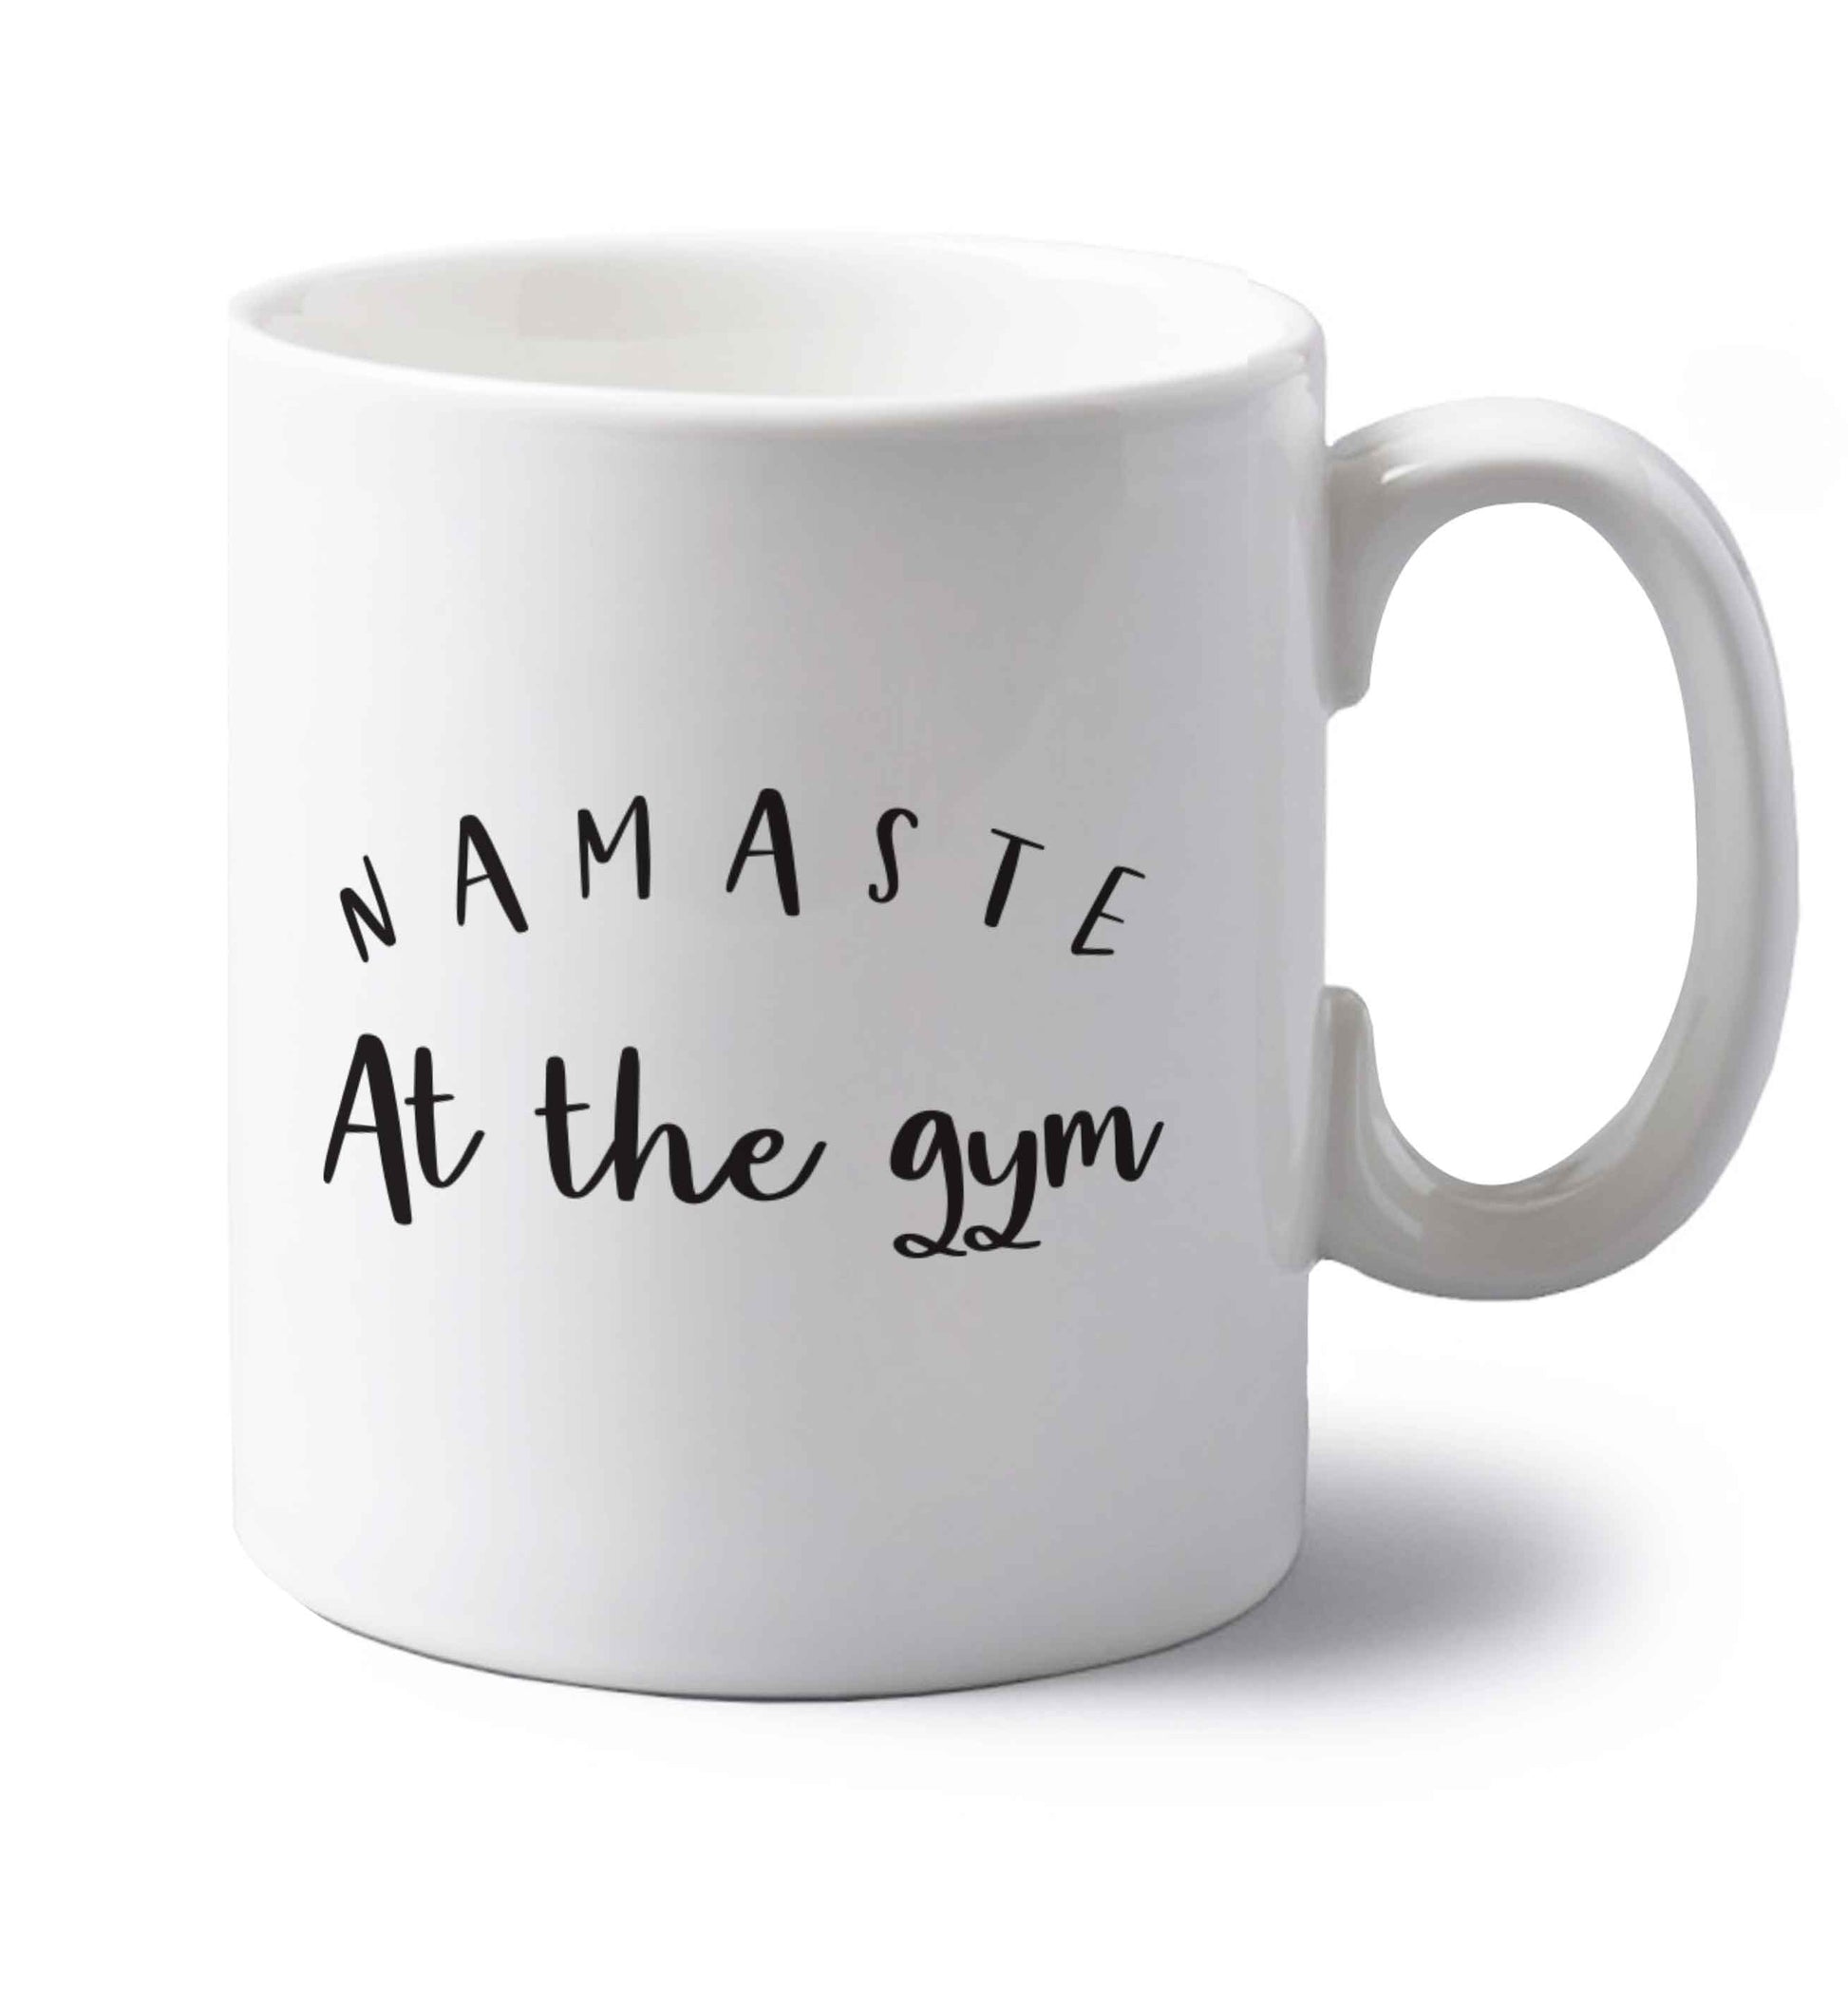 Namaste at the gym left handed white ceramic mug 